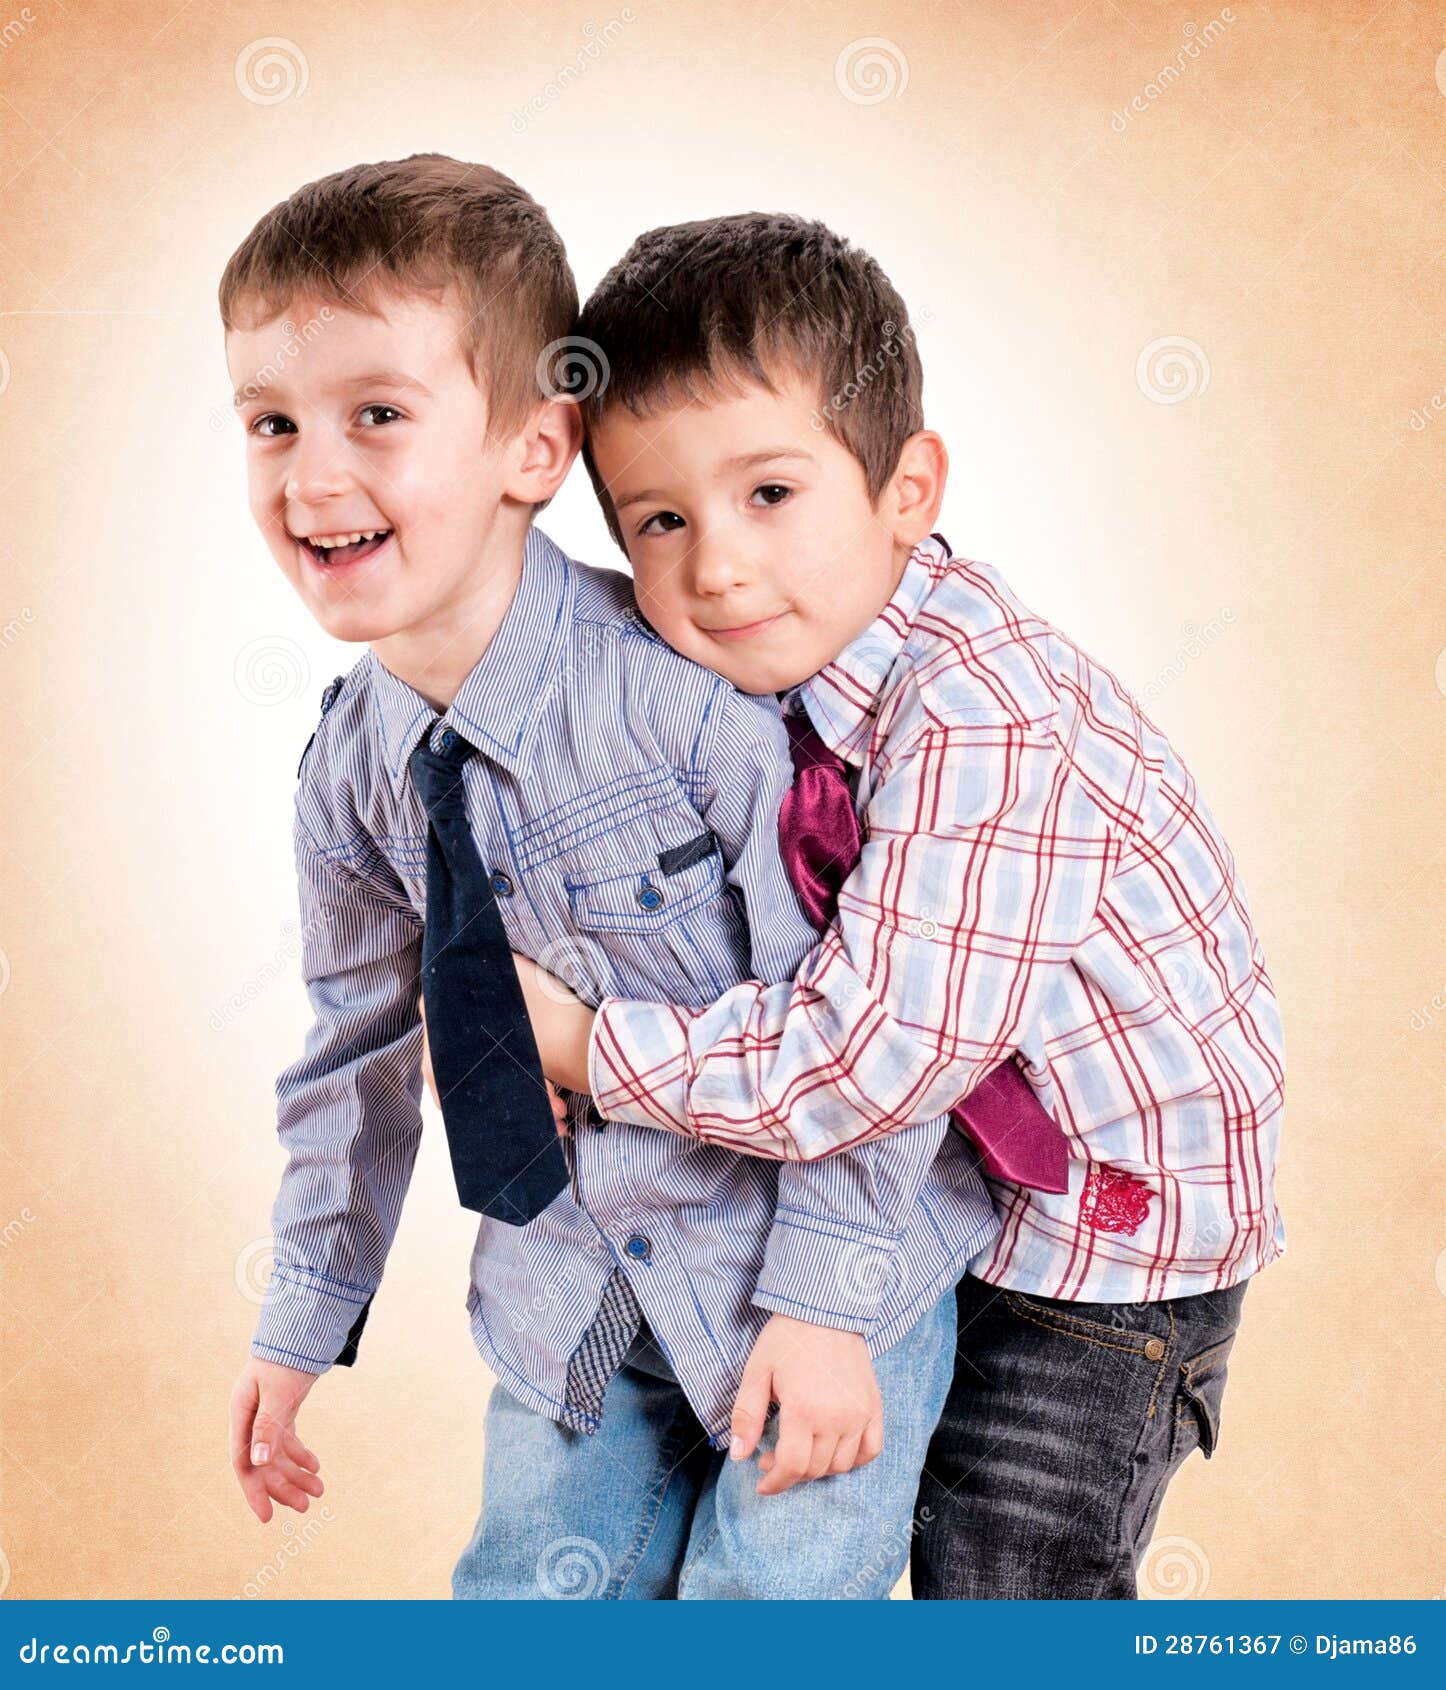 Brothers love stock image. Image of tantrum, studio, twins - 28761367